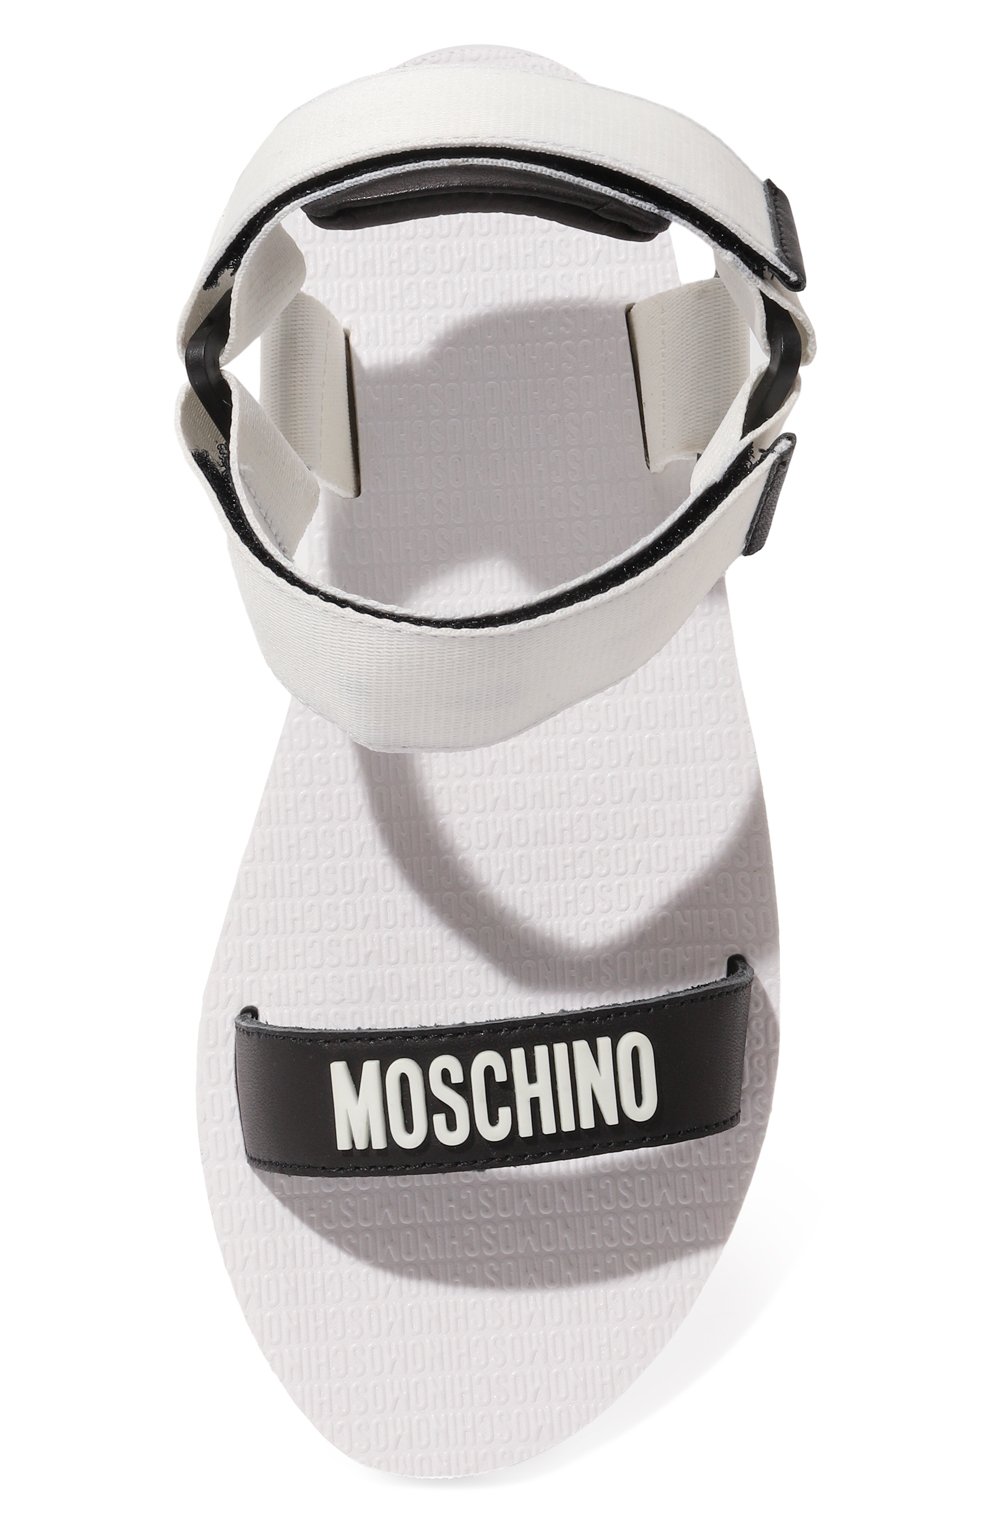 Комбинированные сандалии Moschino MA16658I1G/MV1, цвет чёрно-белый, размер 39 MA16658I1G/MV1 - фото 5